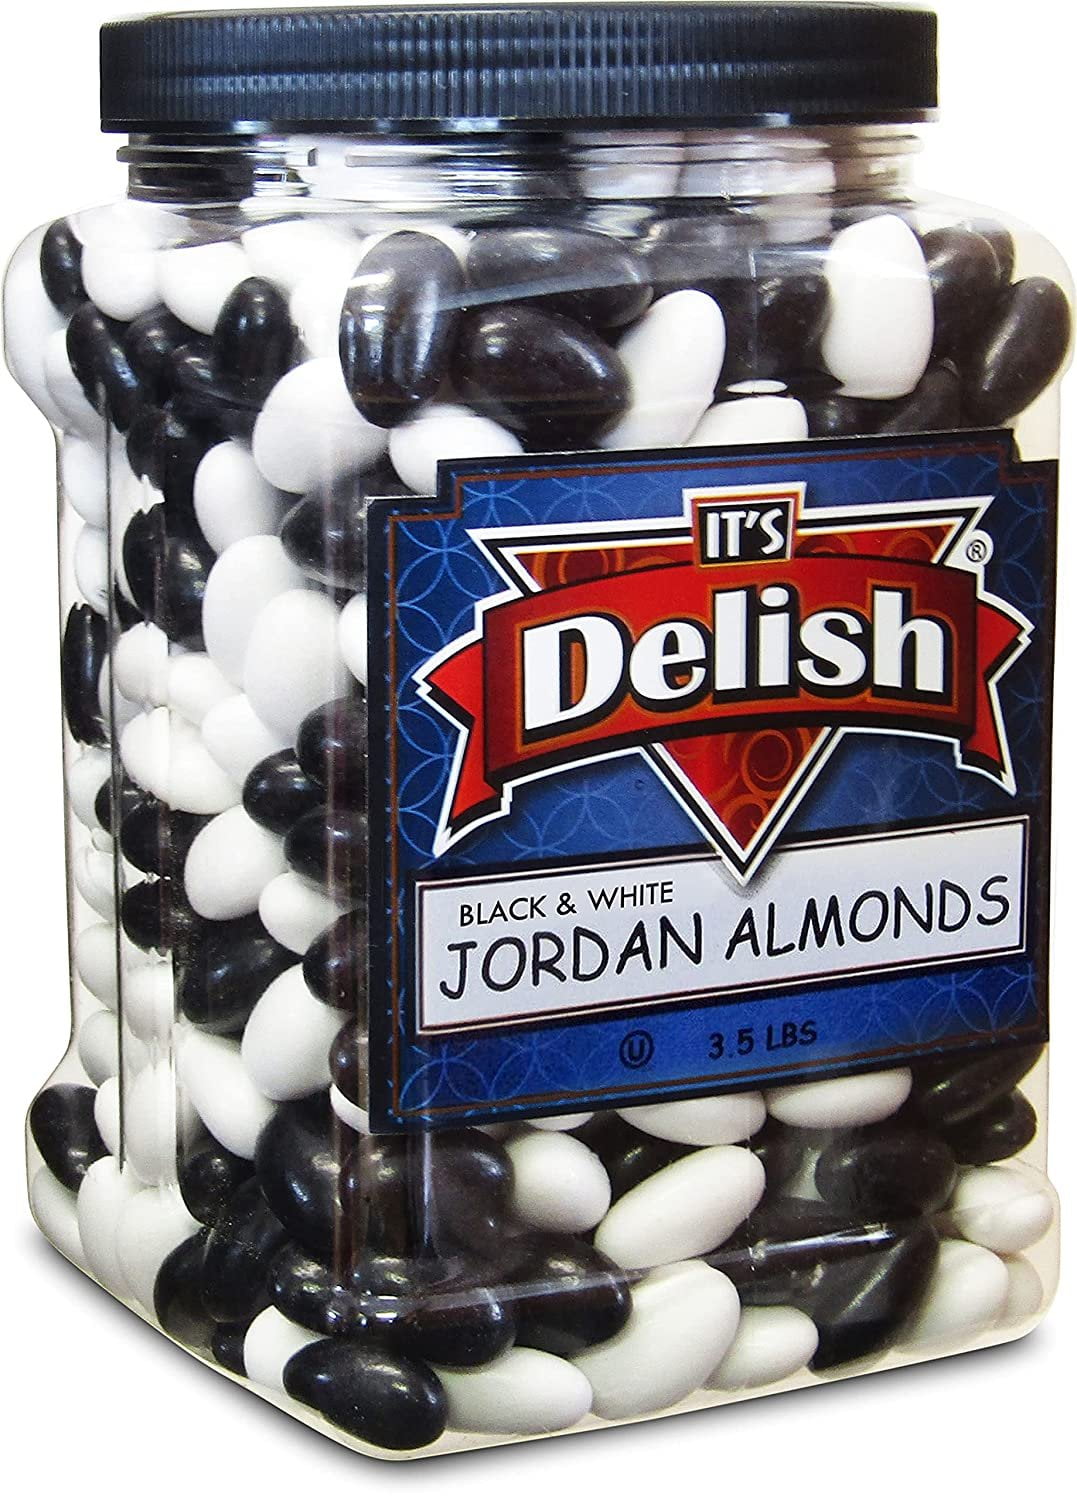 Tuxedo Black & White Jordan Almonds by Its Delish, 3.5 lbs Jumbo ...